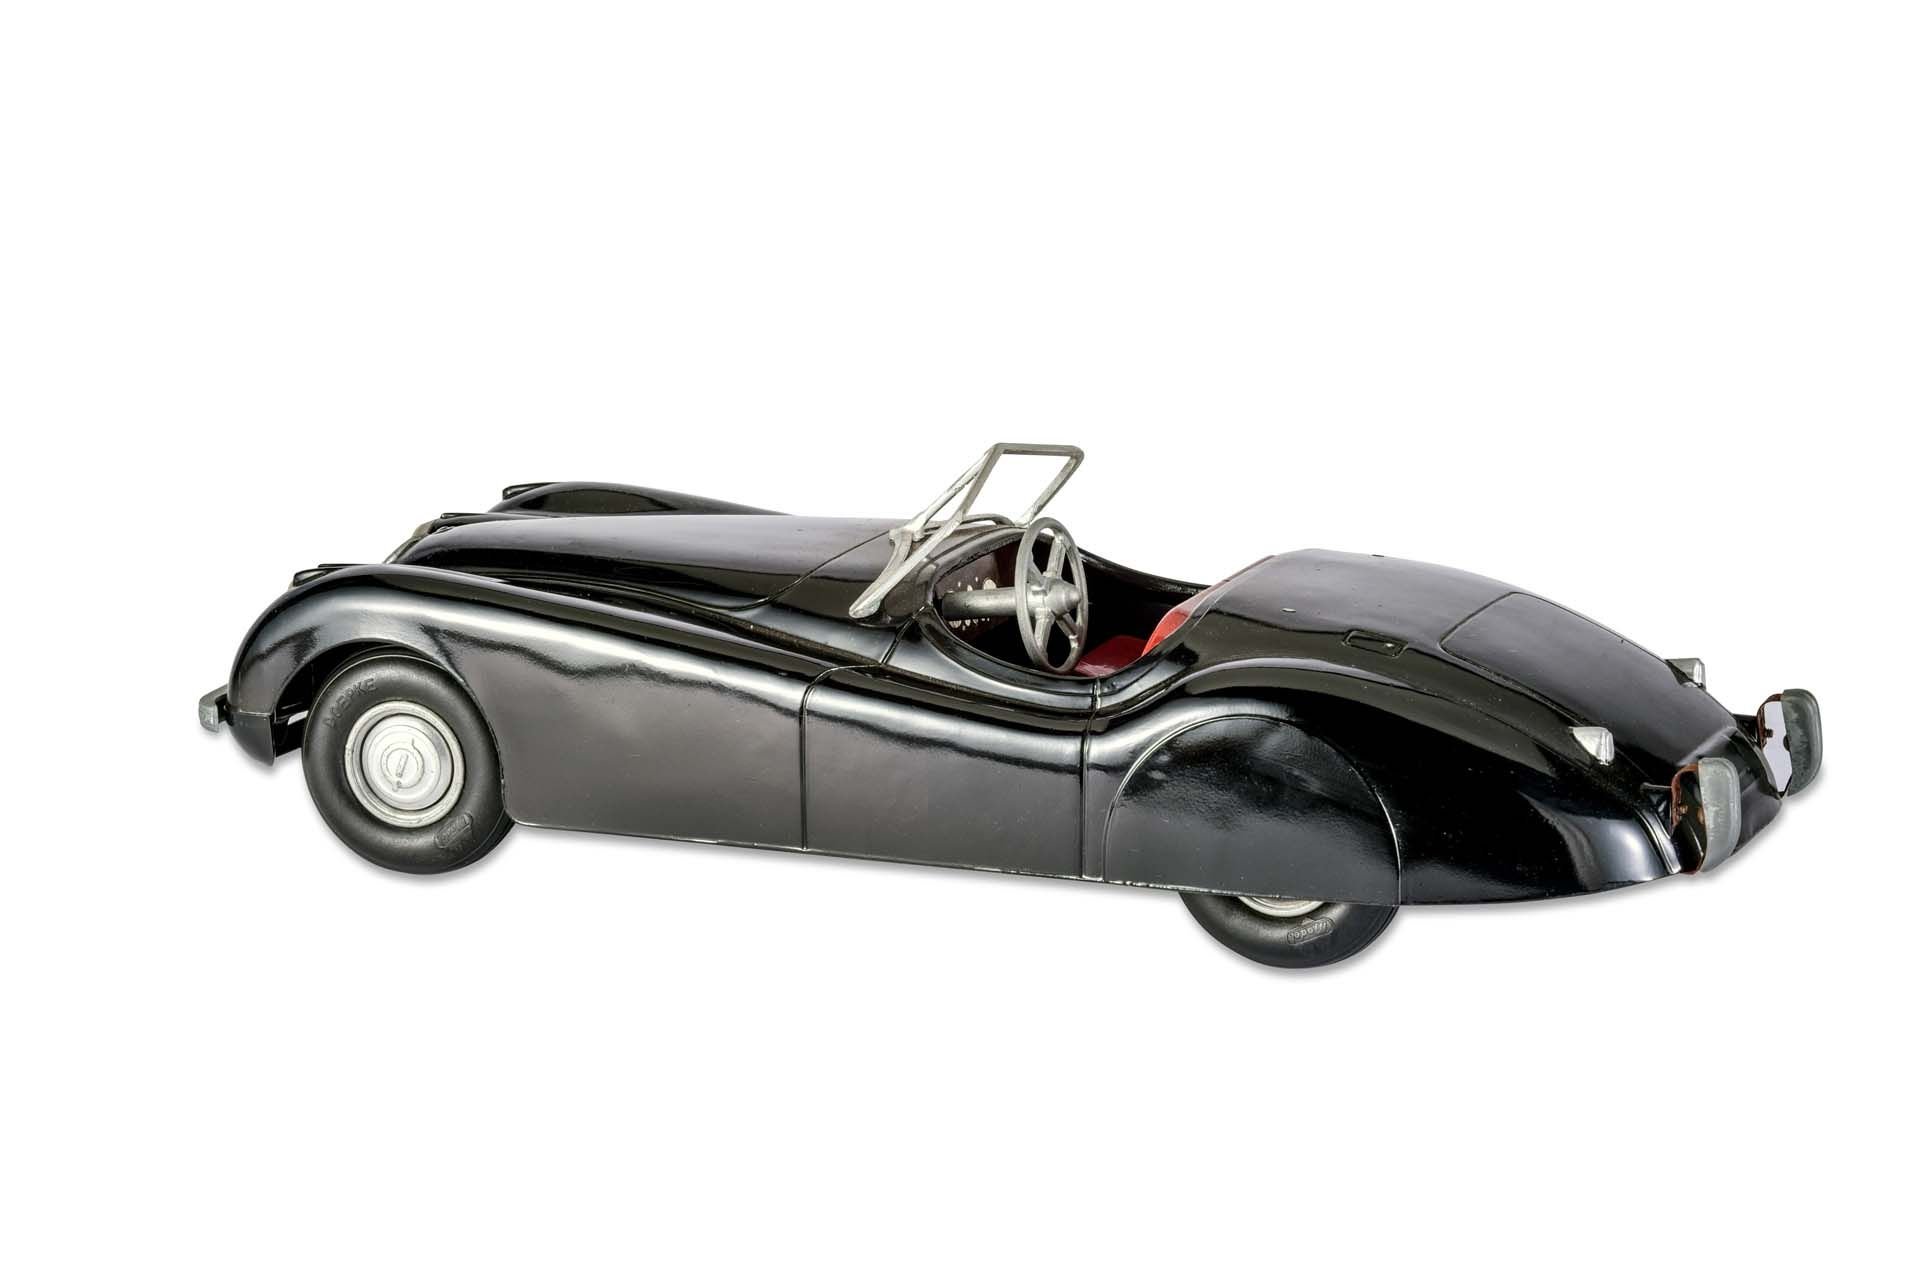 For Sale Doepke Toys 'Jaguar XK120 1950s' 17inch toy car, Black w/black tires